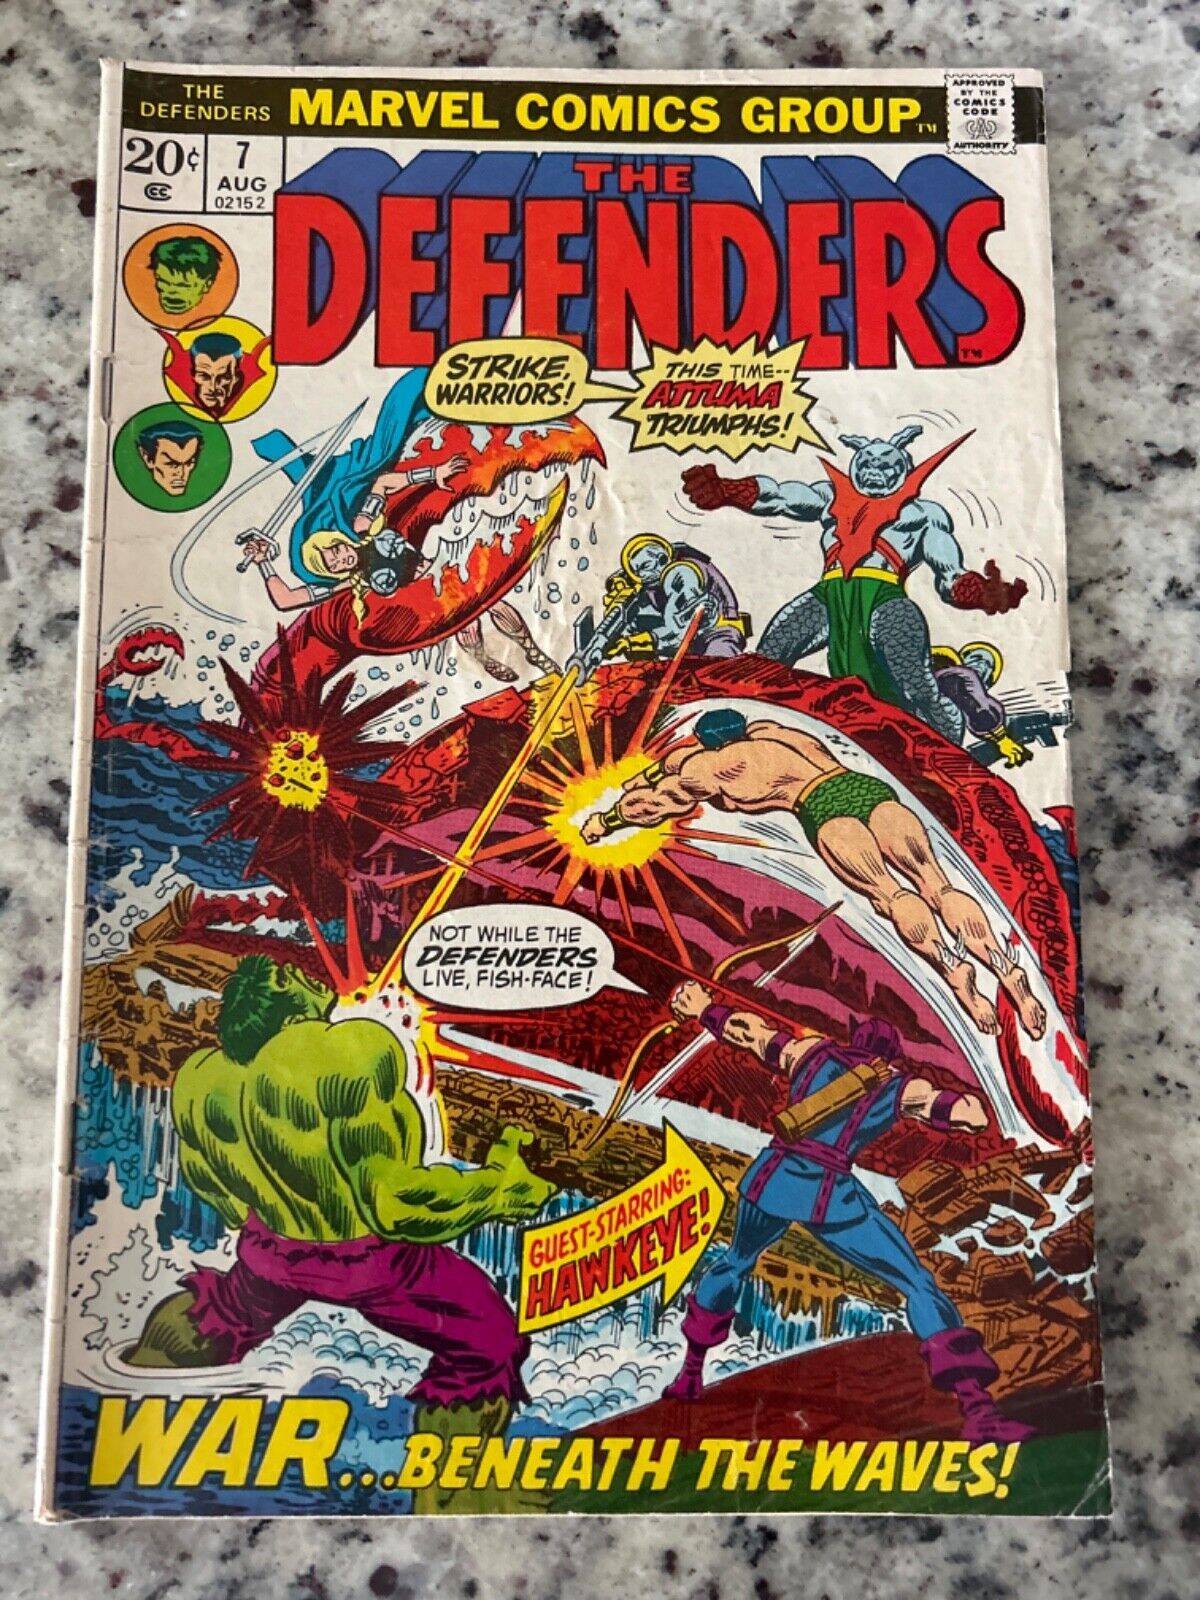 Defenders #7 Vol. 1 (Marvel, 1973) Key Hawkeyes Joins, damaged reader only